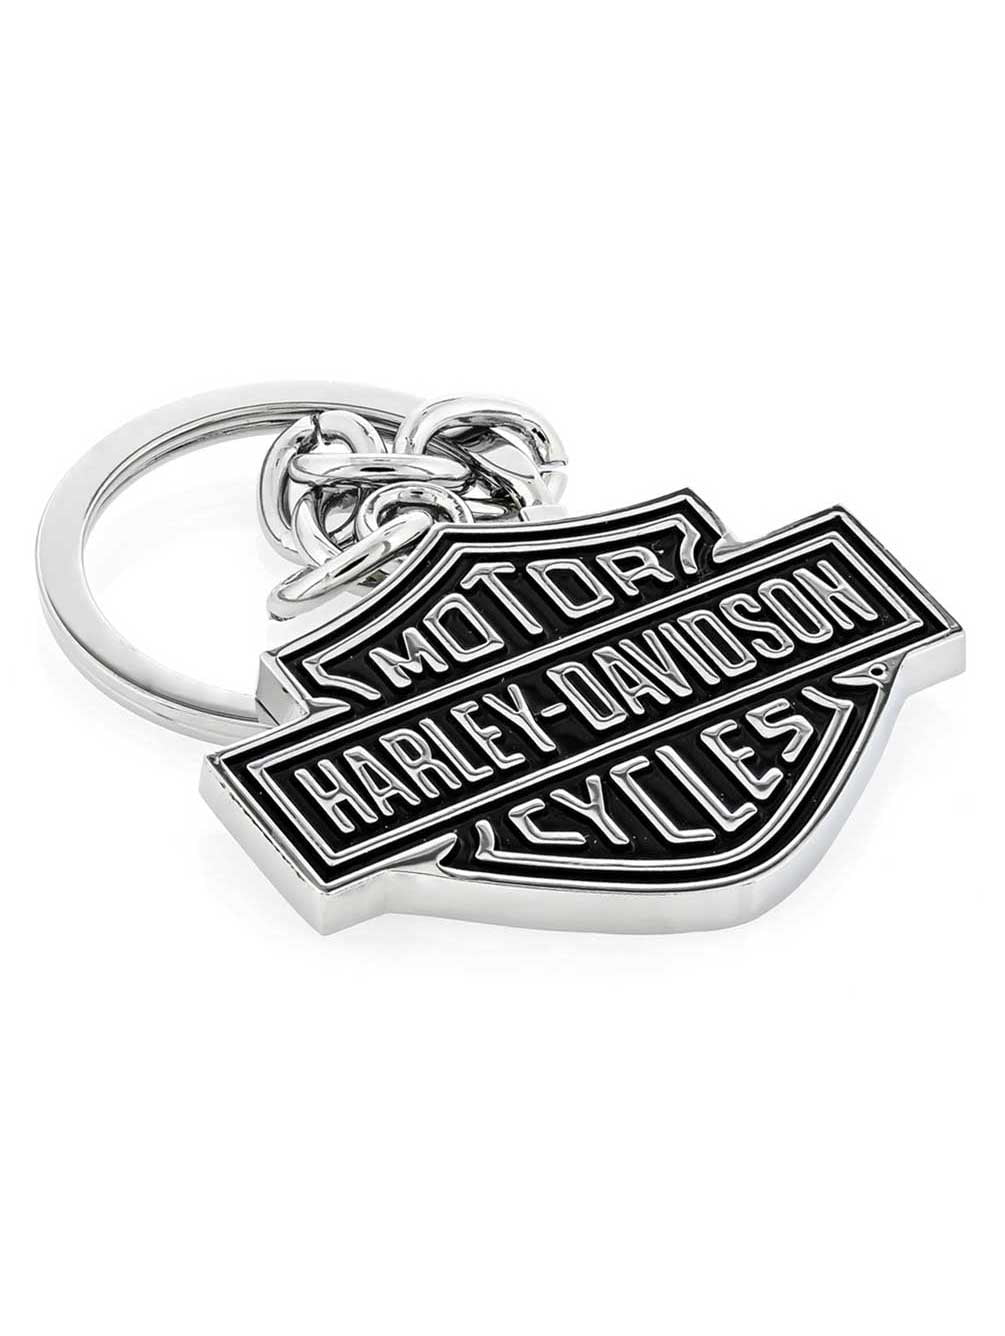 Motor Harley Davidson Cycle bar & shield charm silver with black enamel Last ONE 